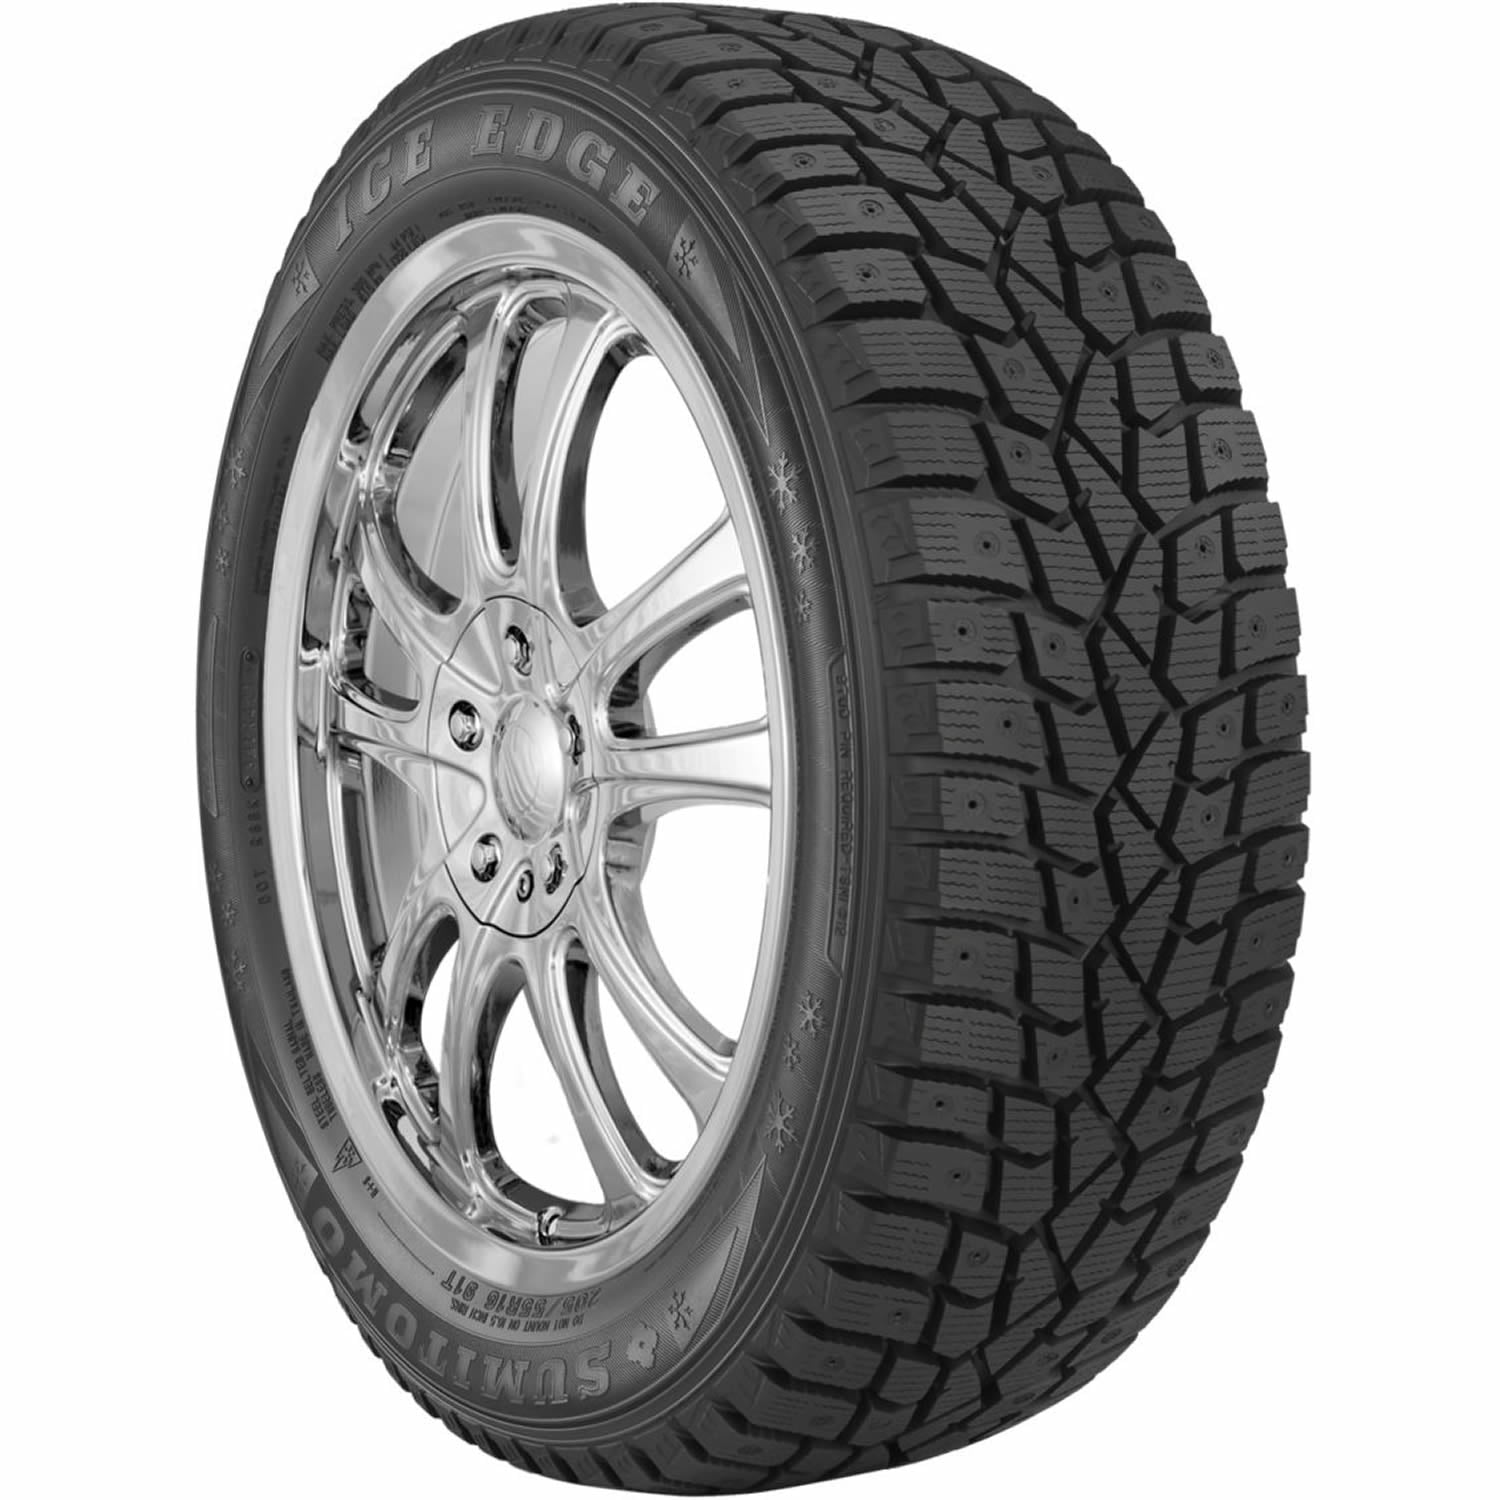 SUMITOMO ICE EDGE 235/55R17 (27.3X9.5R 17) Tires